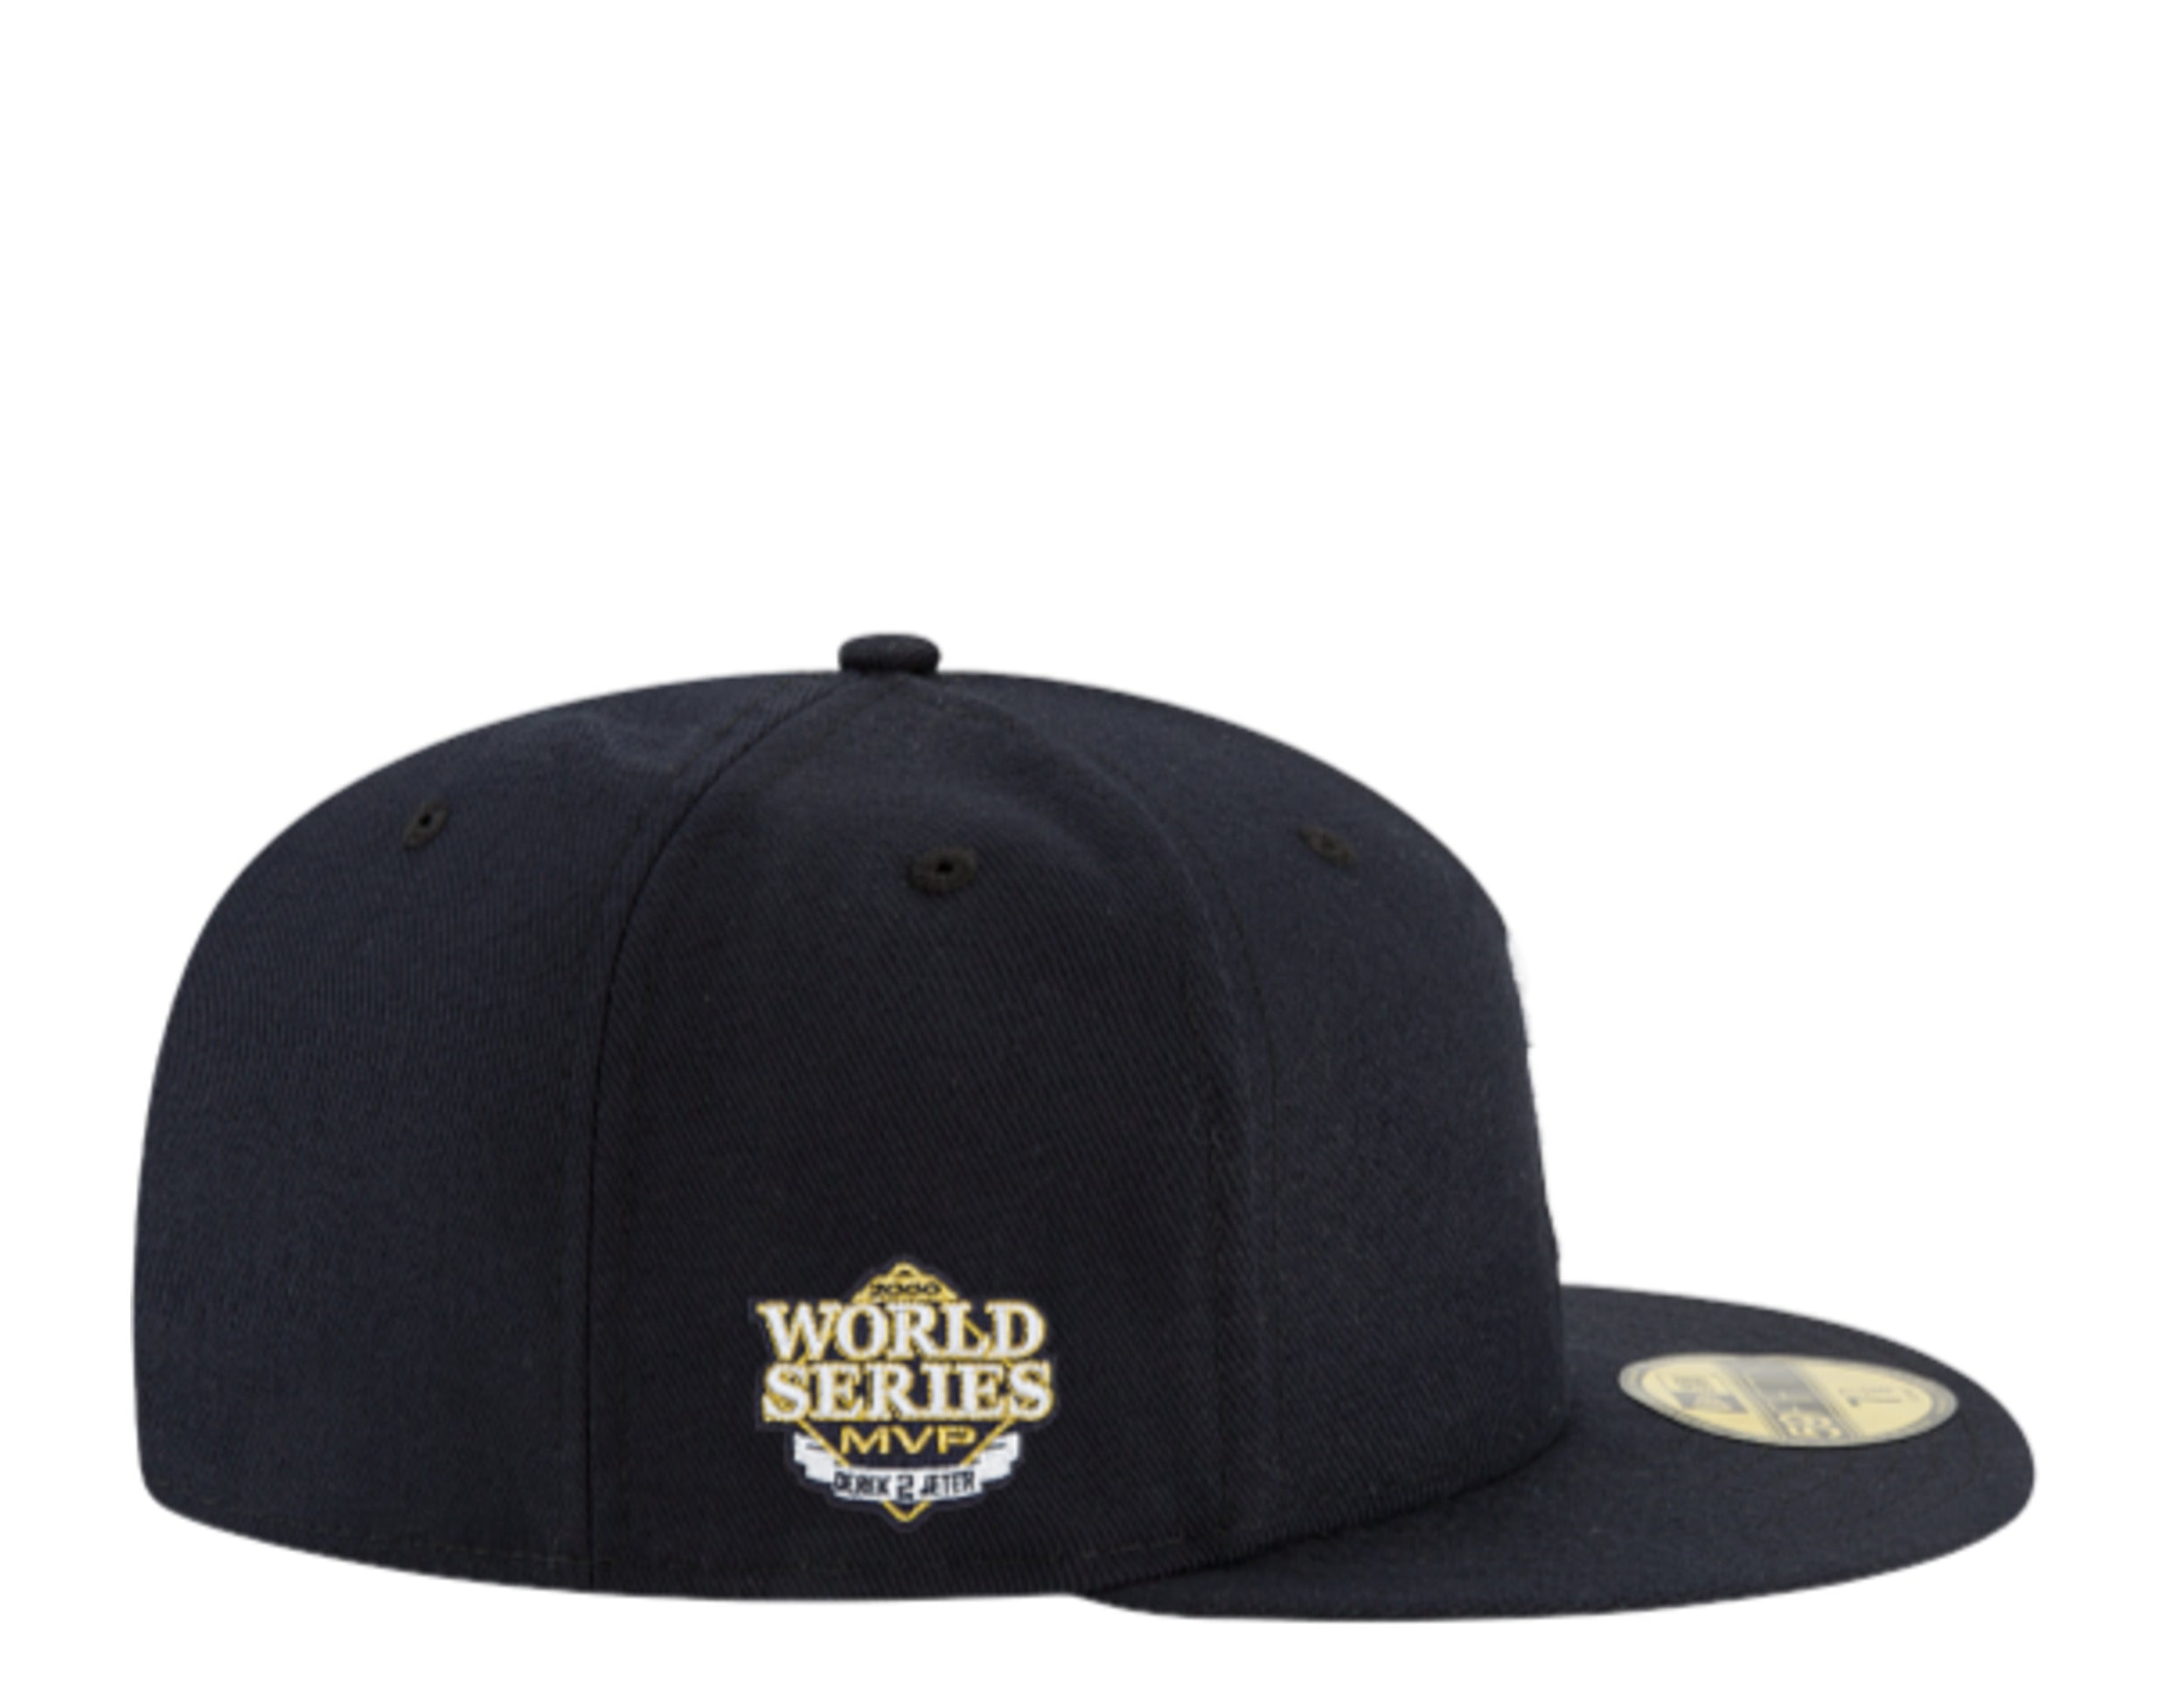 2000 world series hat